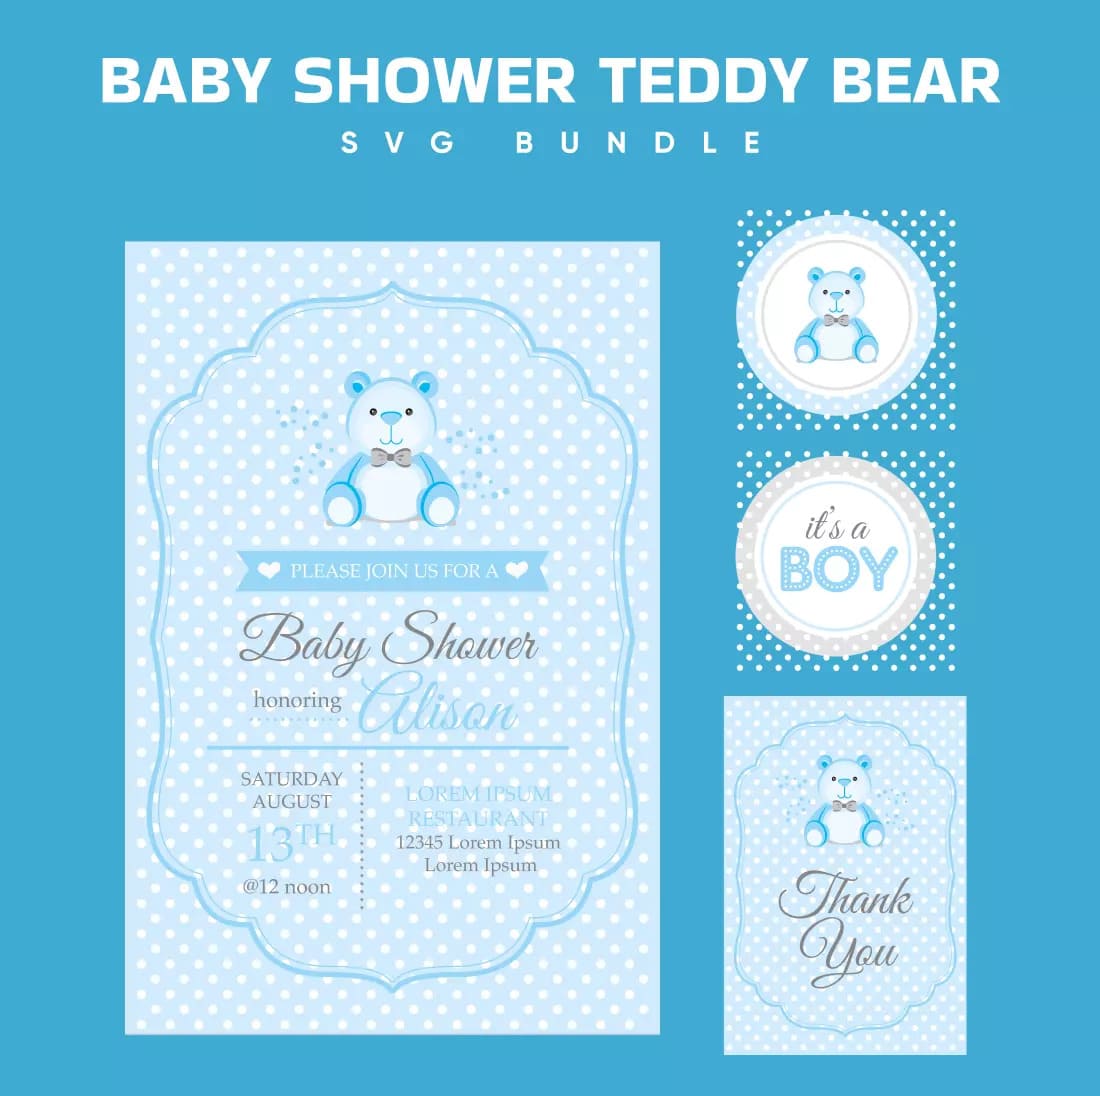 Baby shower teddy bear baby shower set.